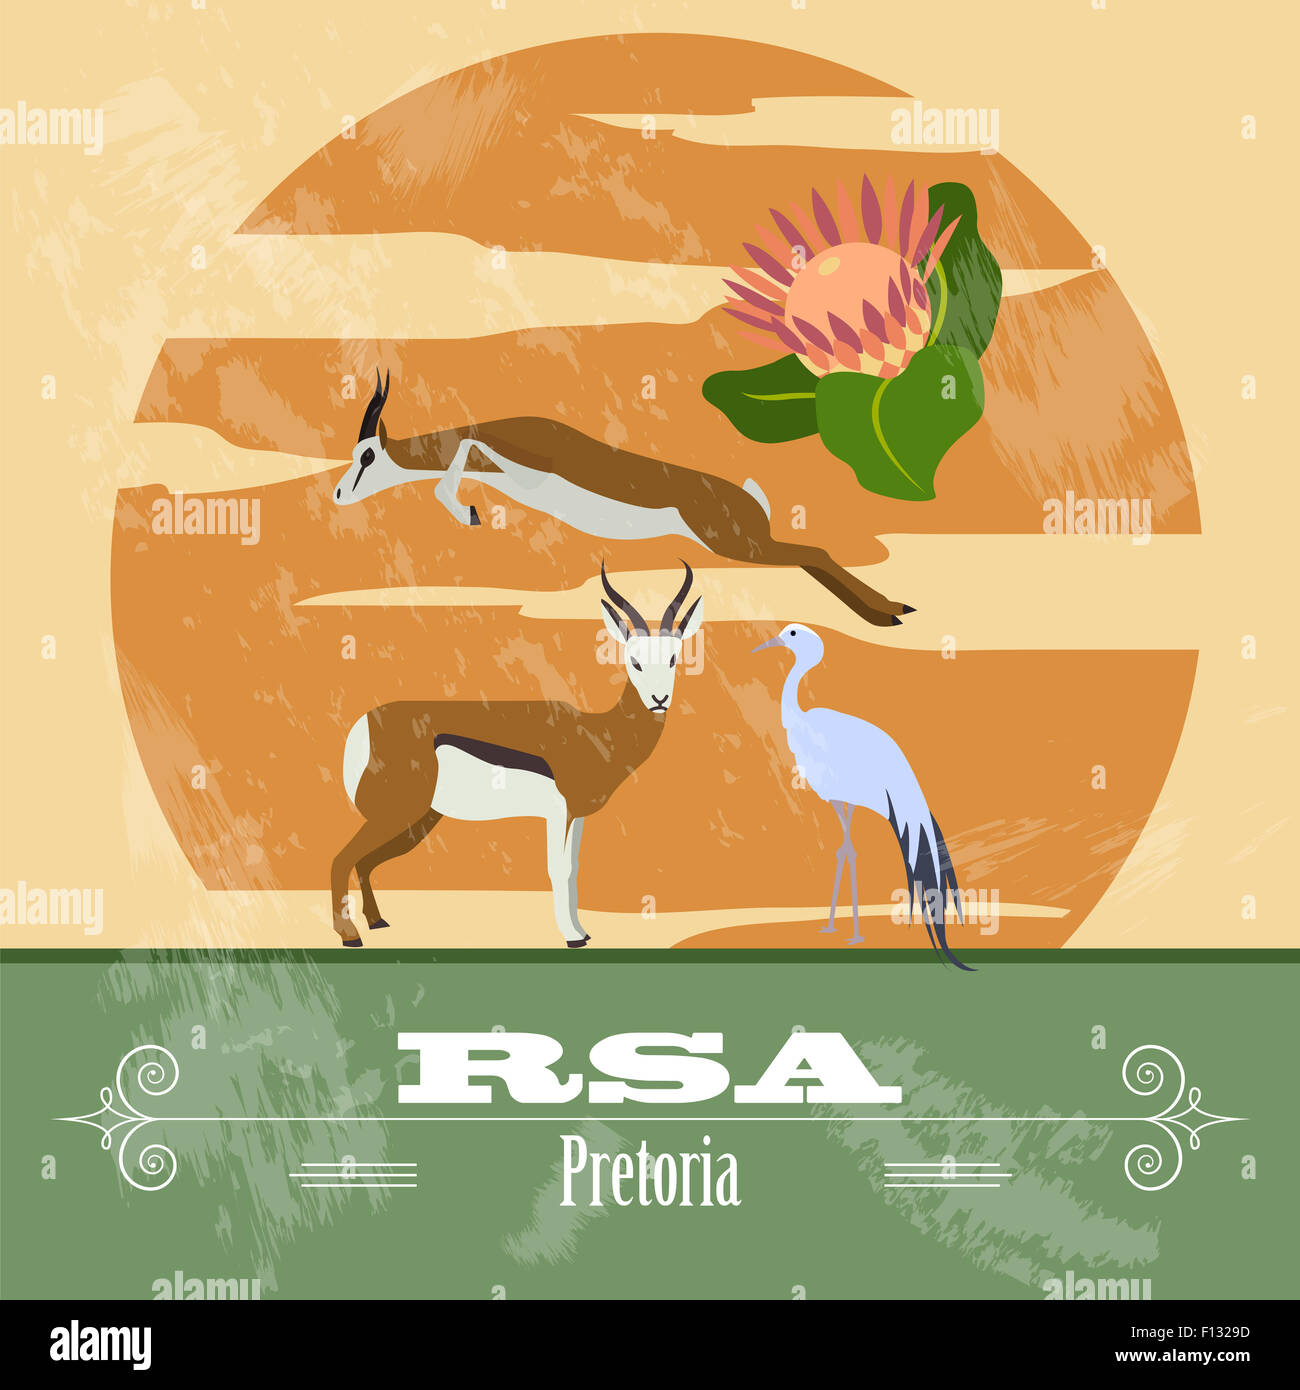 RSA. Retro styled image. Vector illustration Stock Photo